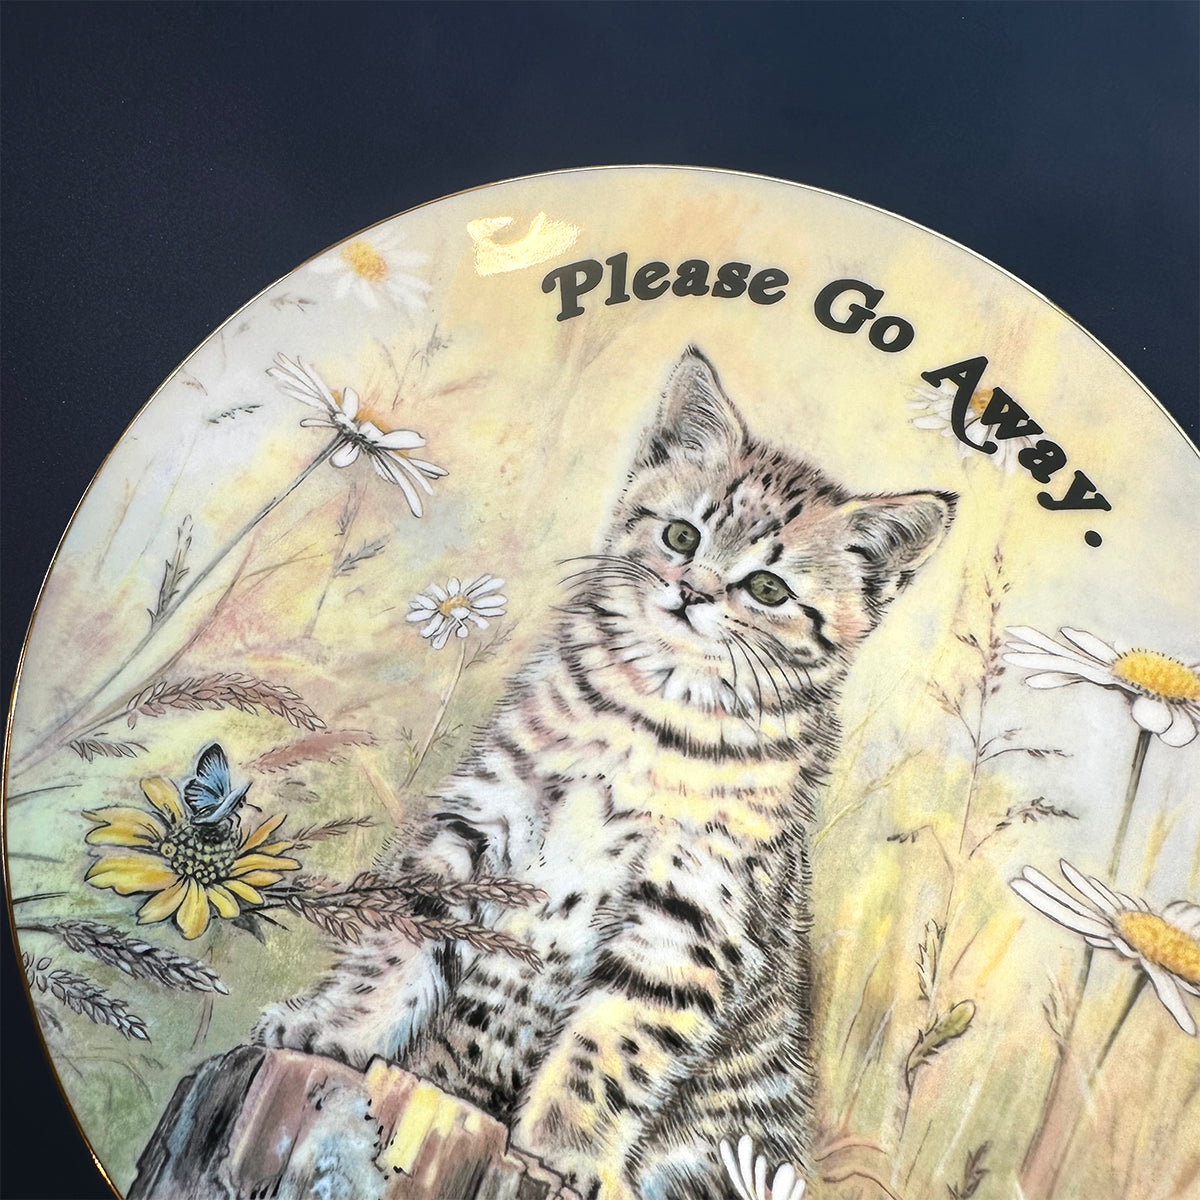 Vintage Art Plate - Cat plate - "Please Go Away"